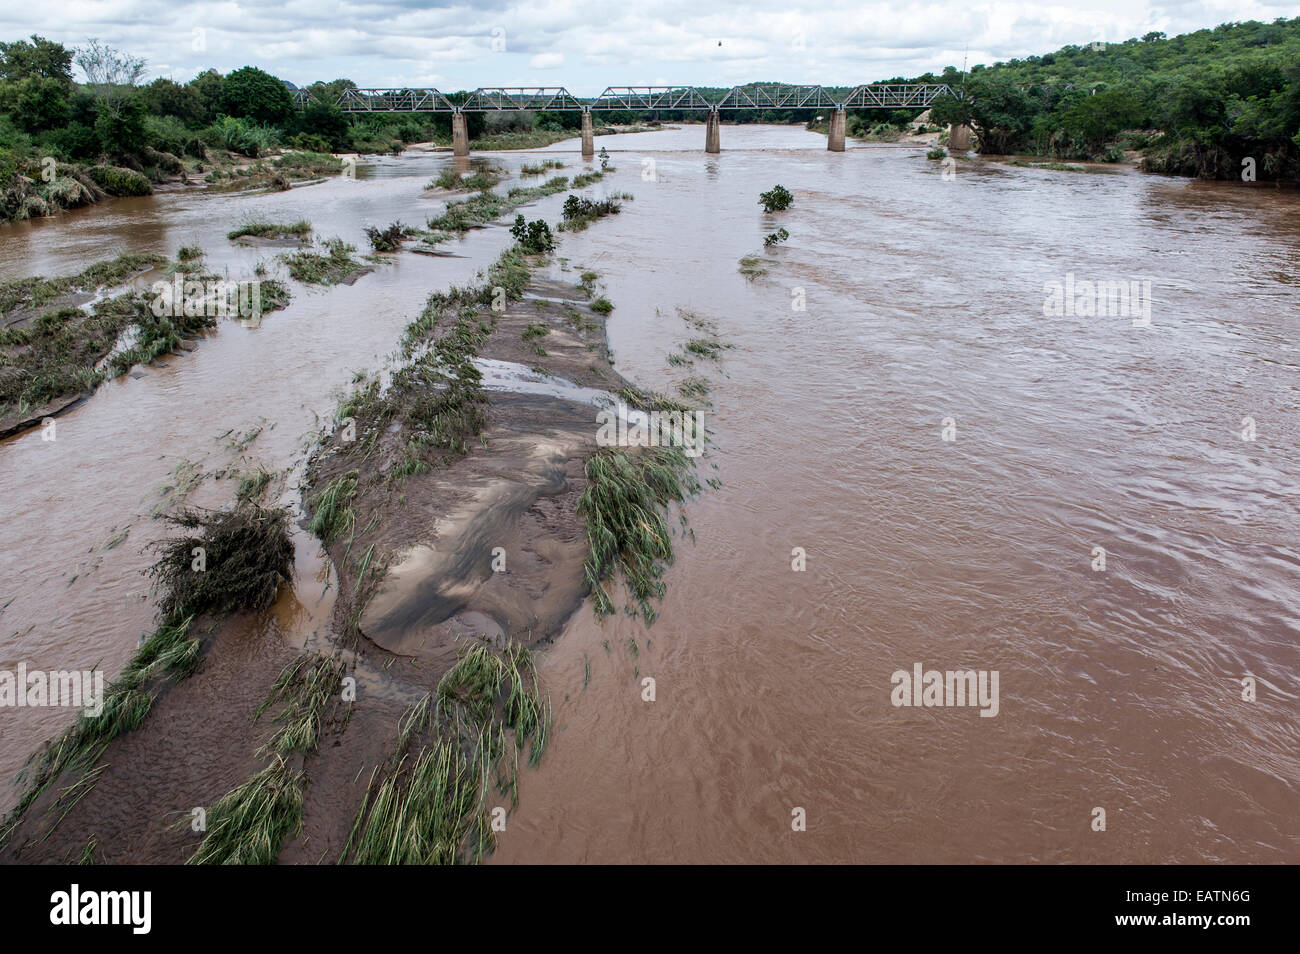 A flooded river swollen with silt flows beneath a railway bridge. Stock Photo